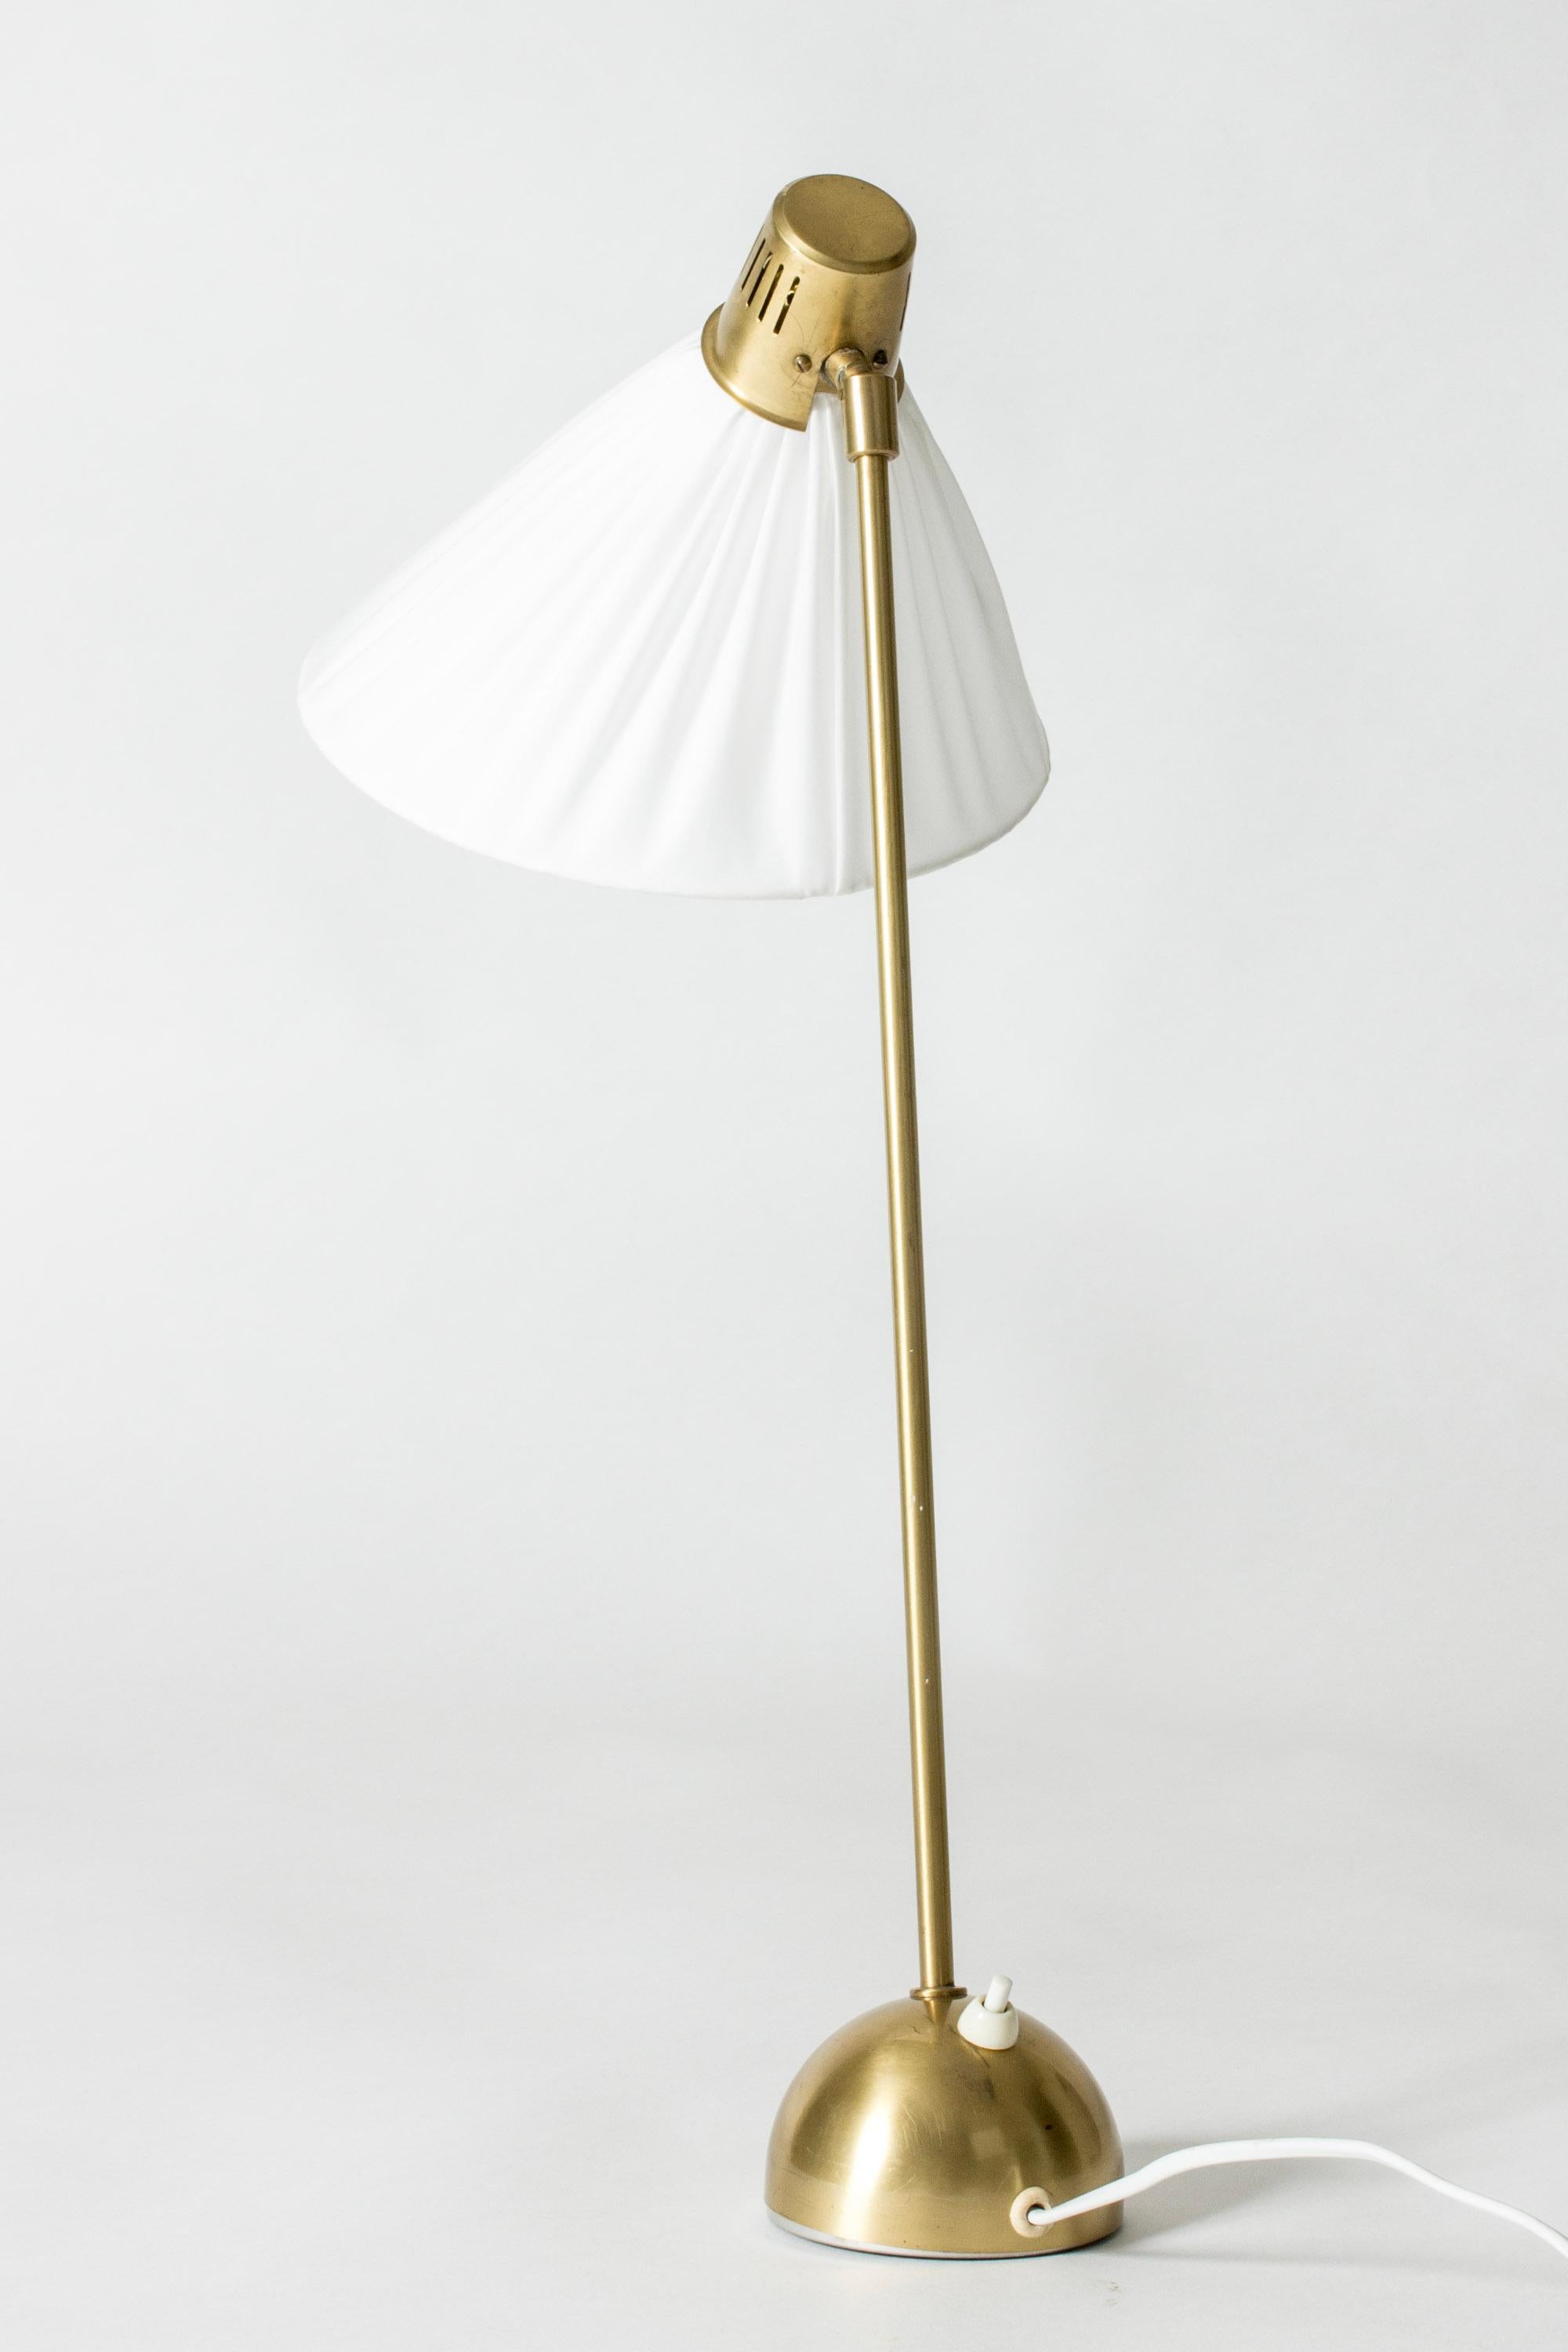 Swedish Midcentury Modern Brass Table lamp by Hans Bergström, Ateljé Lyktan, 1950s For Sale